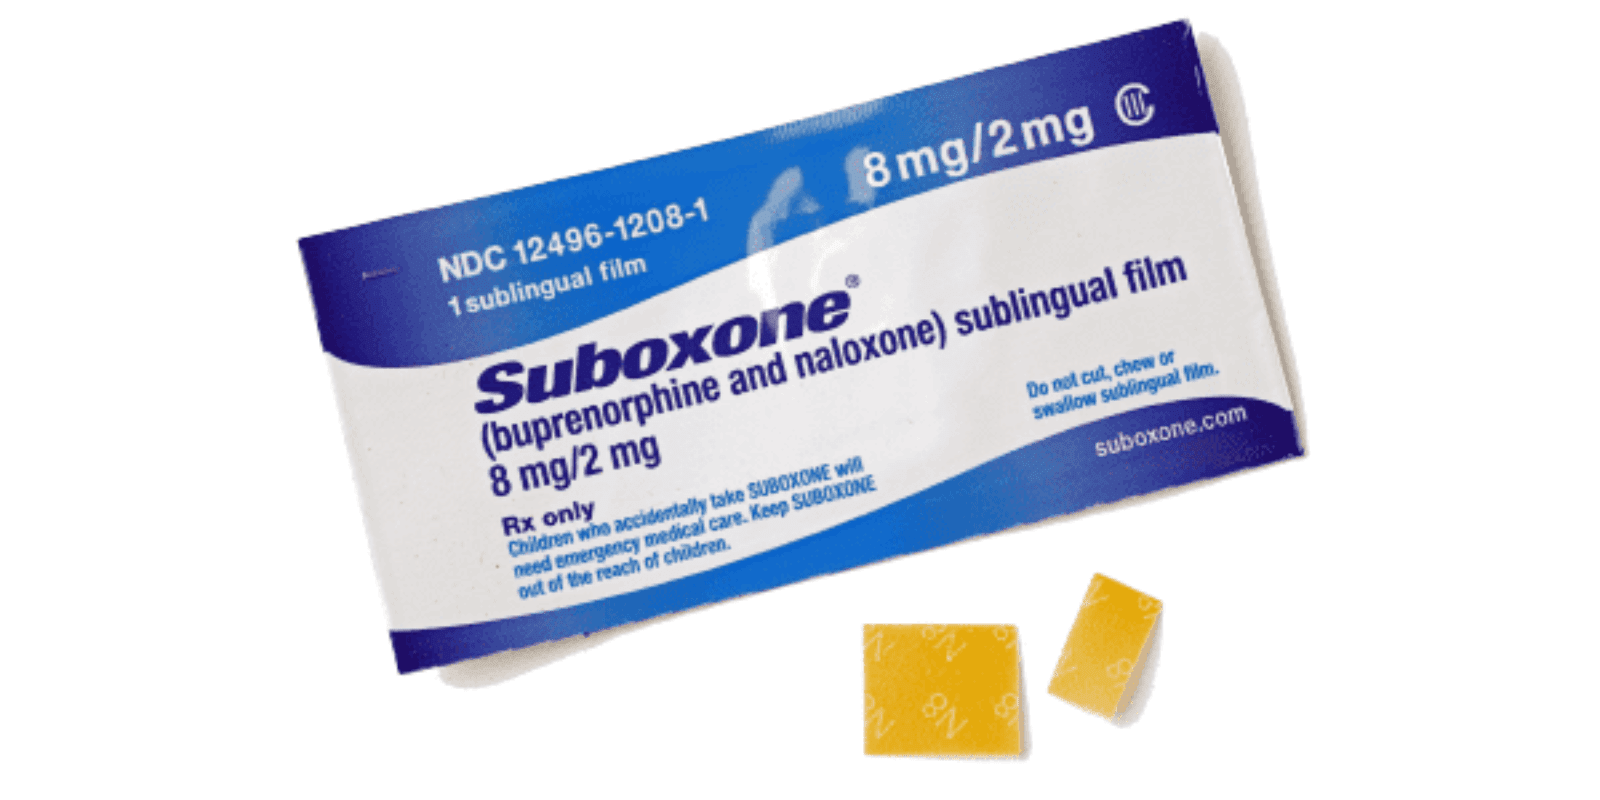 box of suboxone